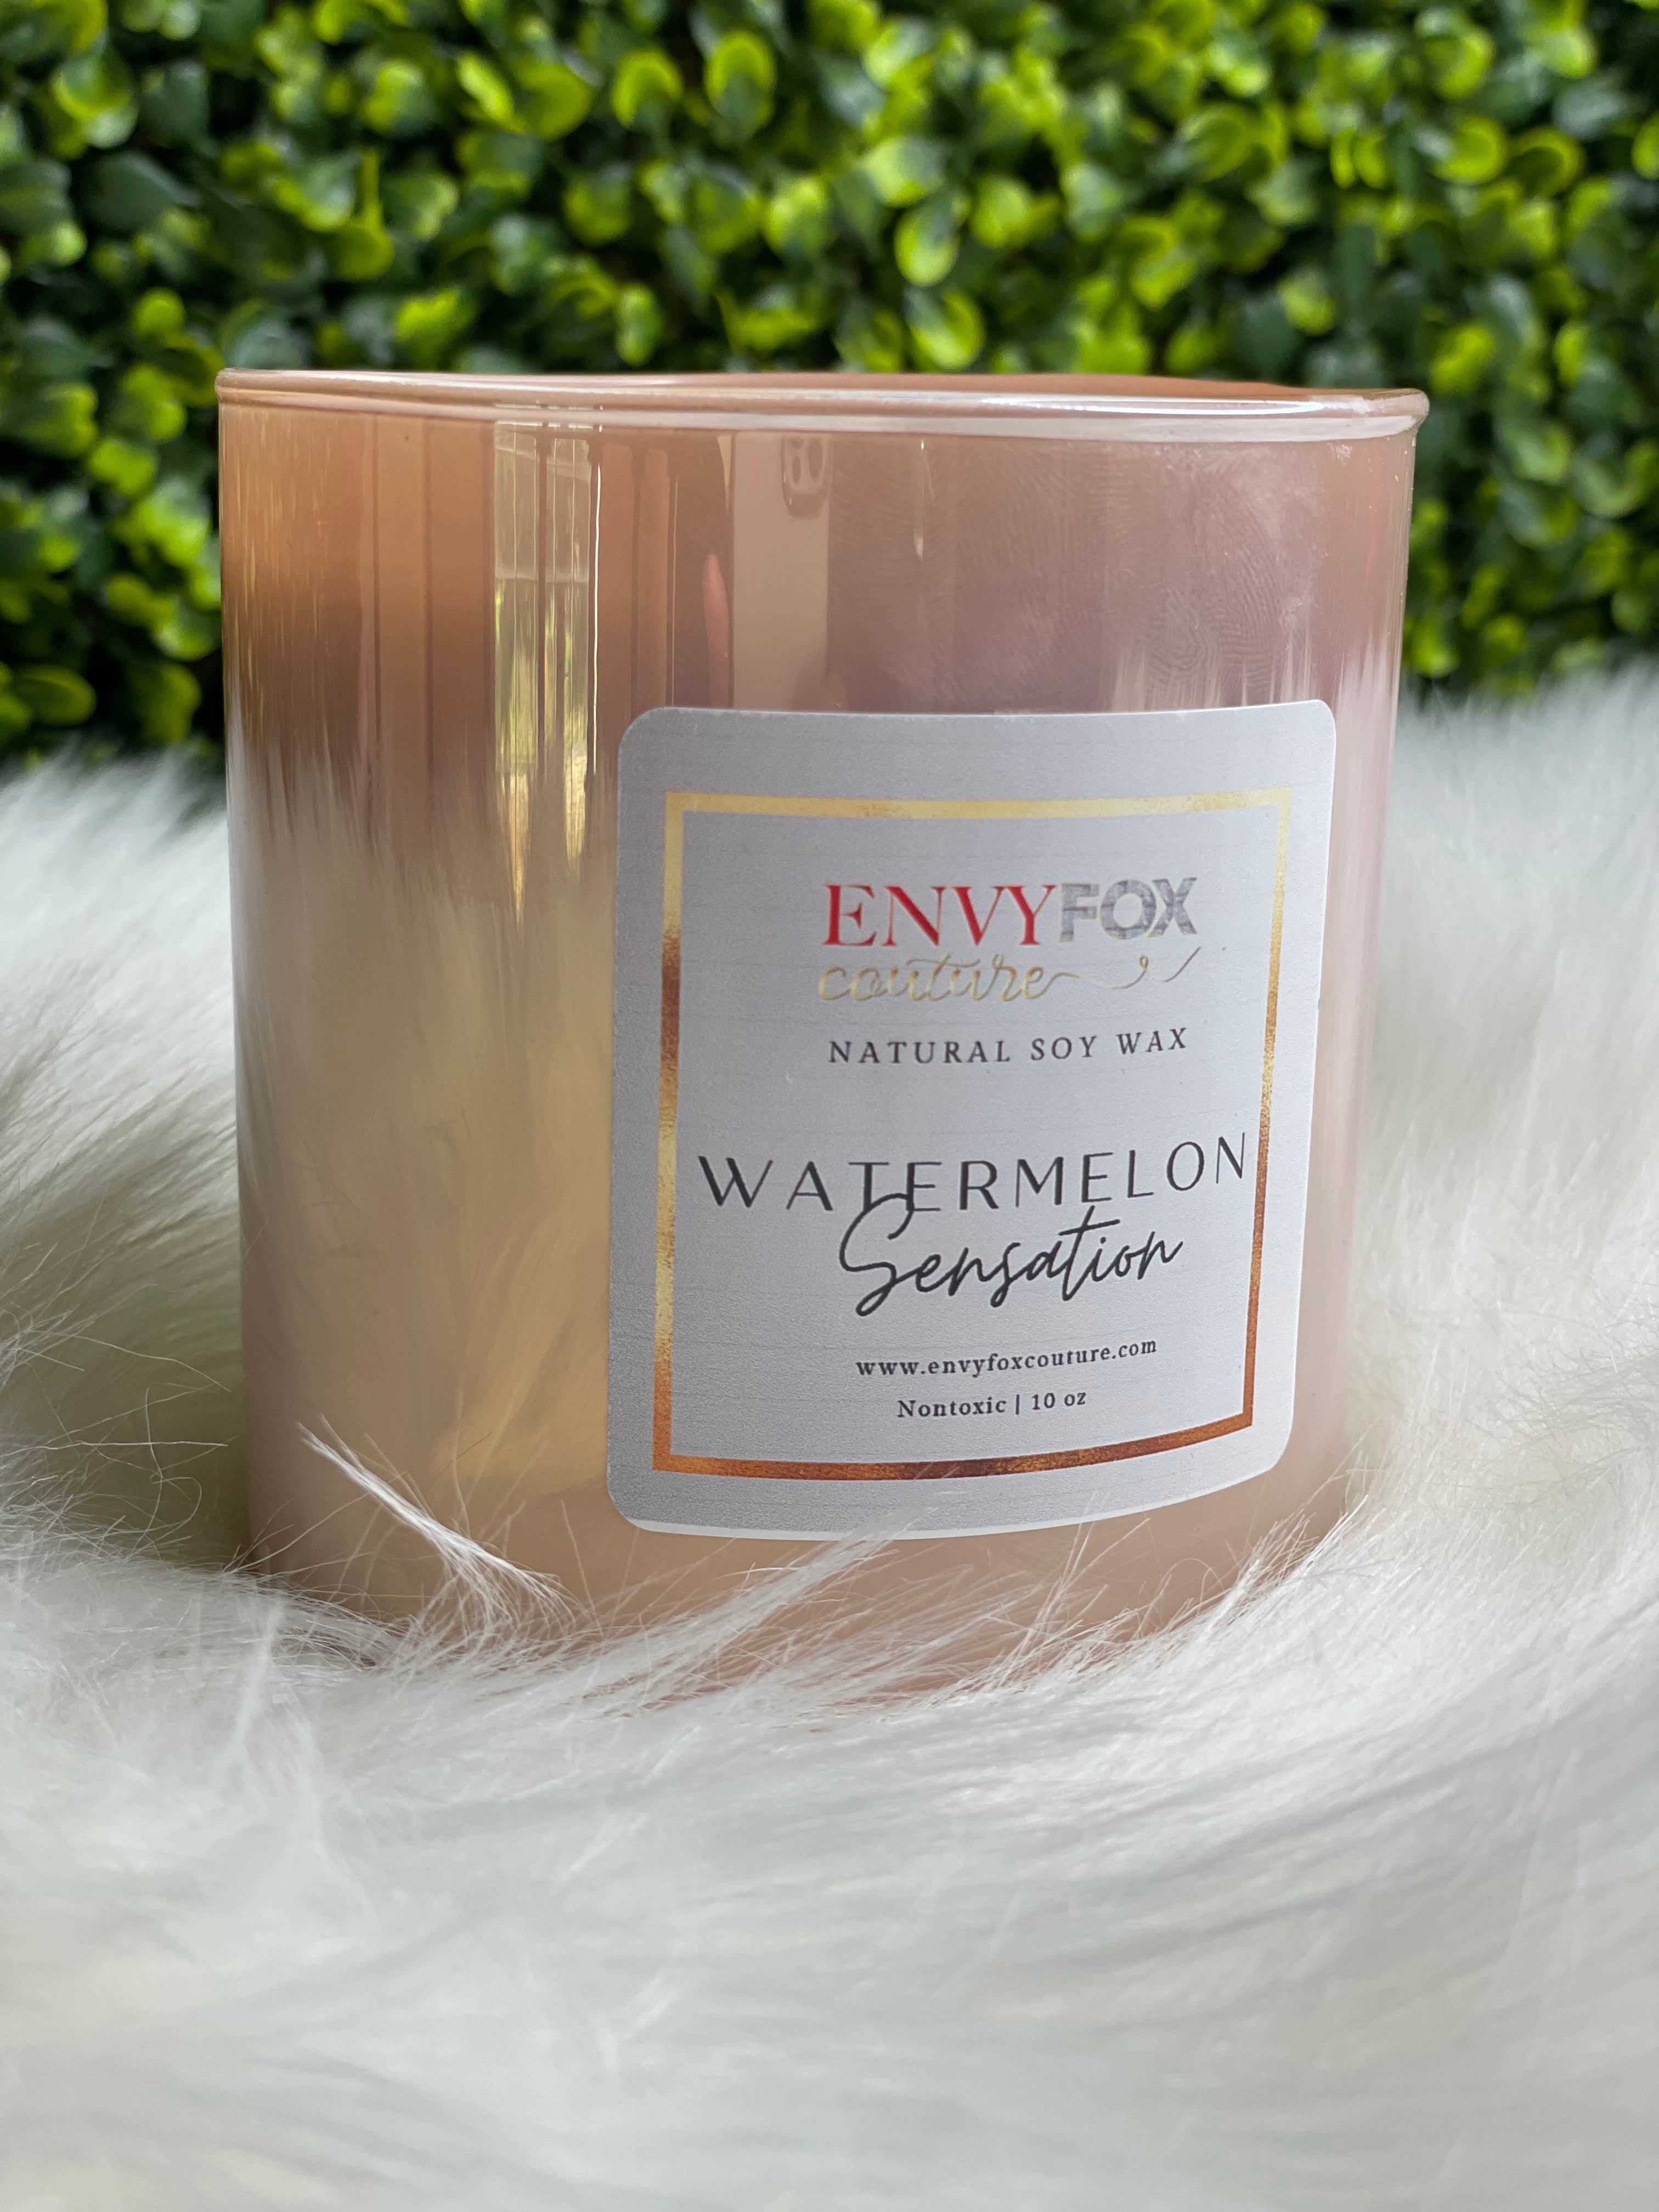 Watermelon Sensation 10 oz Natural Soy Wax Candle